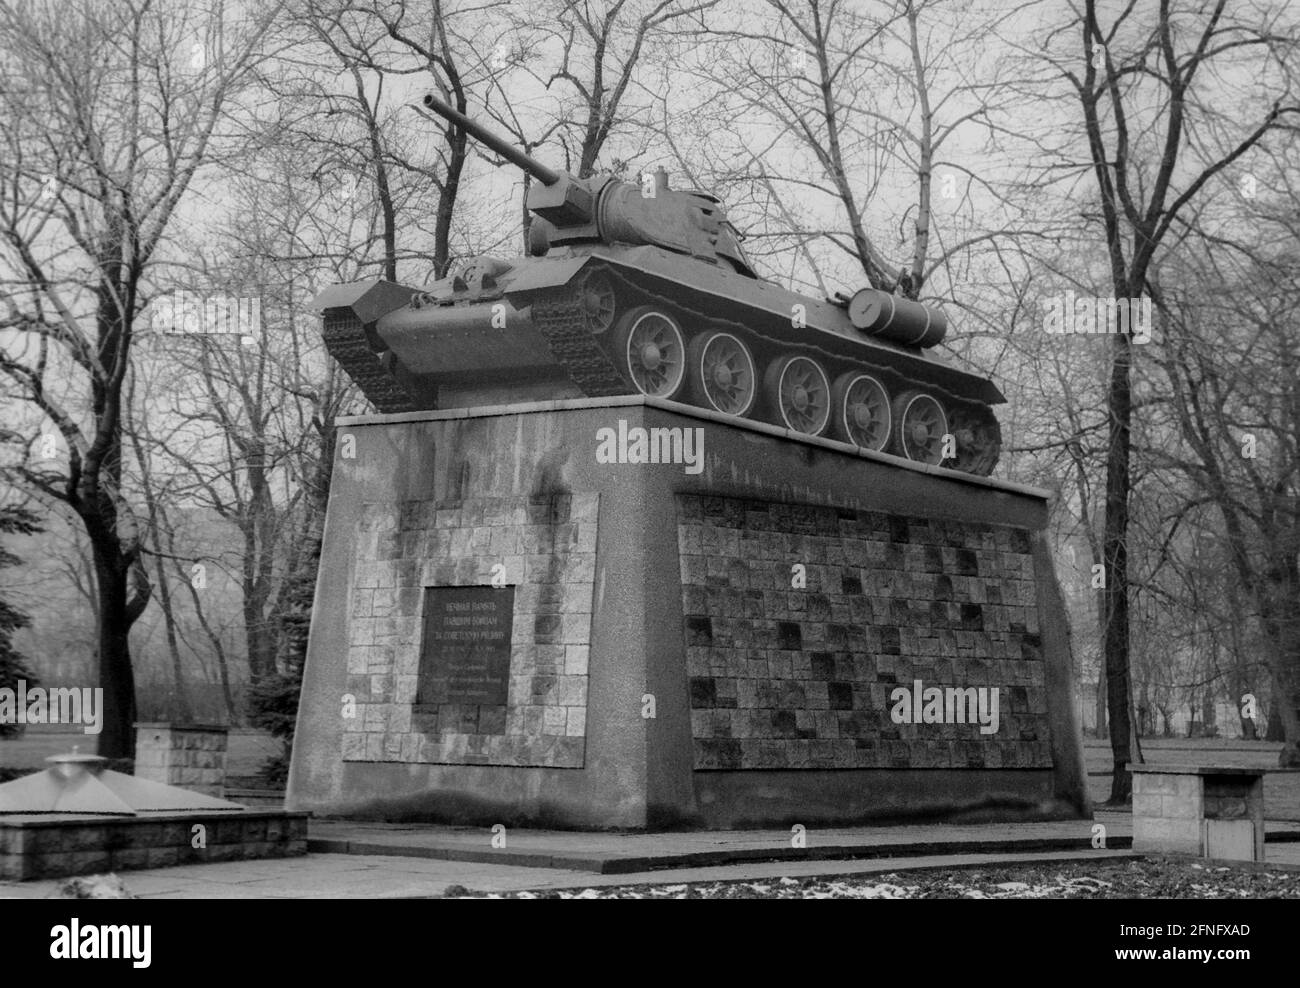 Saxony / GDR Land / 1992 Grimma: Monument Soviet tank // History / War / Allies / Soviets / GDR symbol [automated translation] Stock Photo